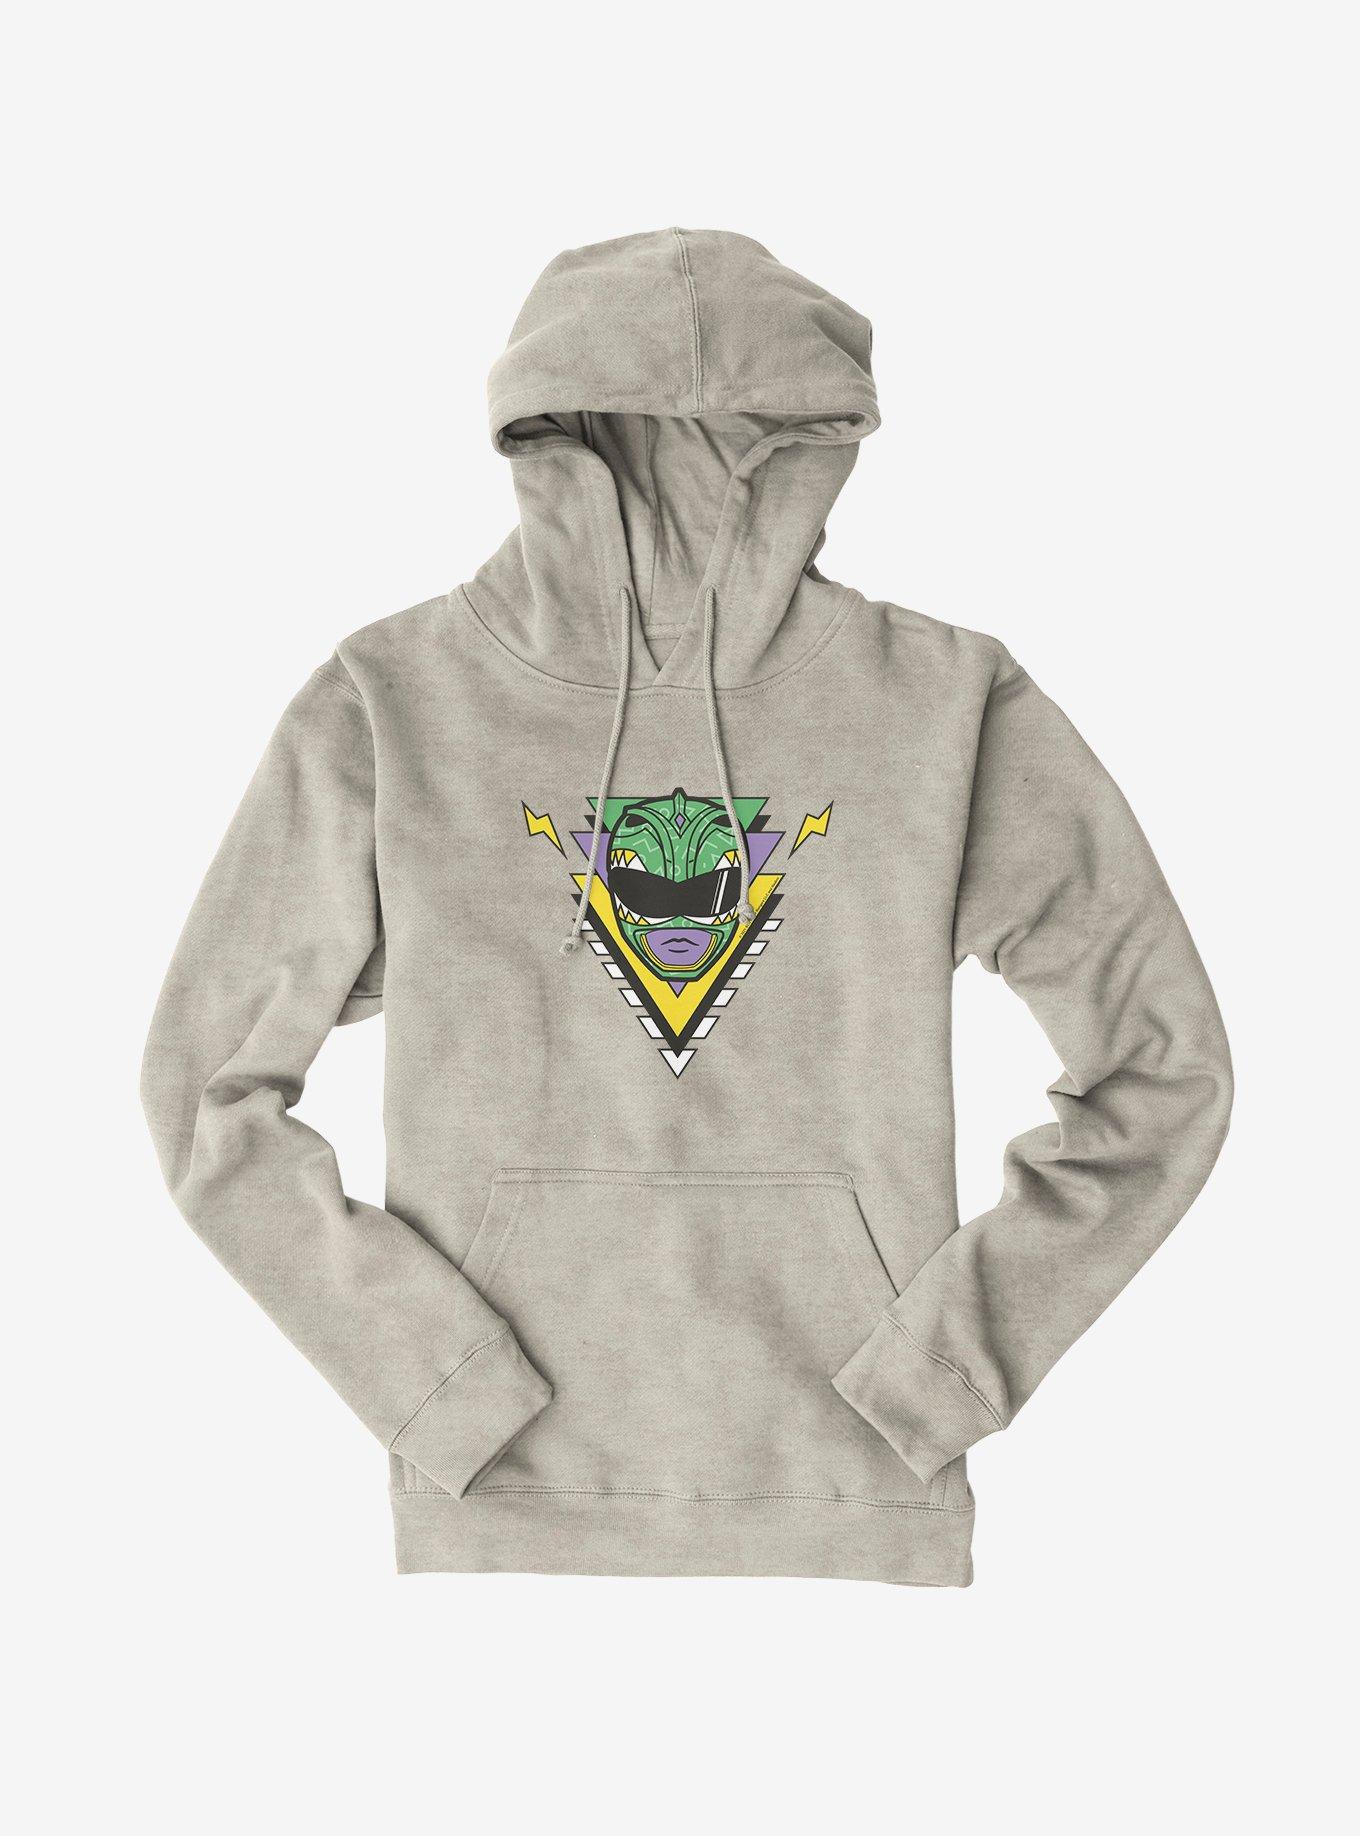 Mighty Morphin Power Rangers Green Ranger Mask Hoodie, , hi-res